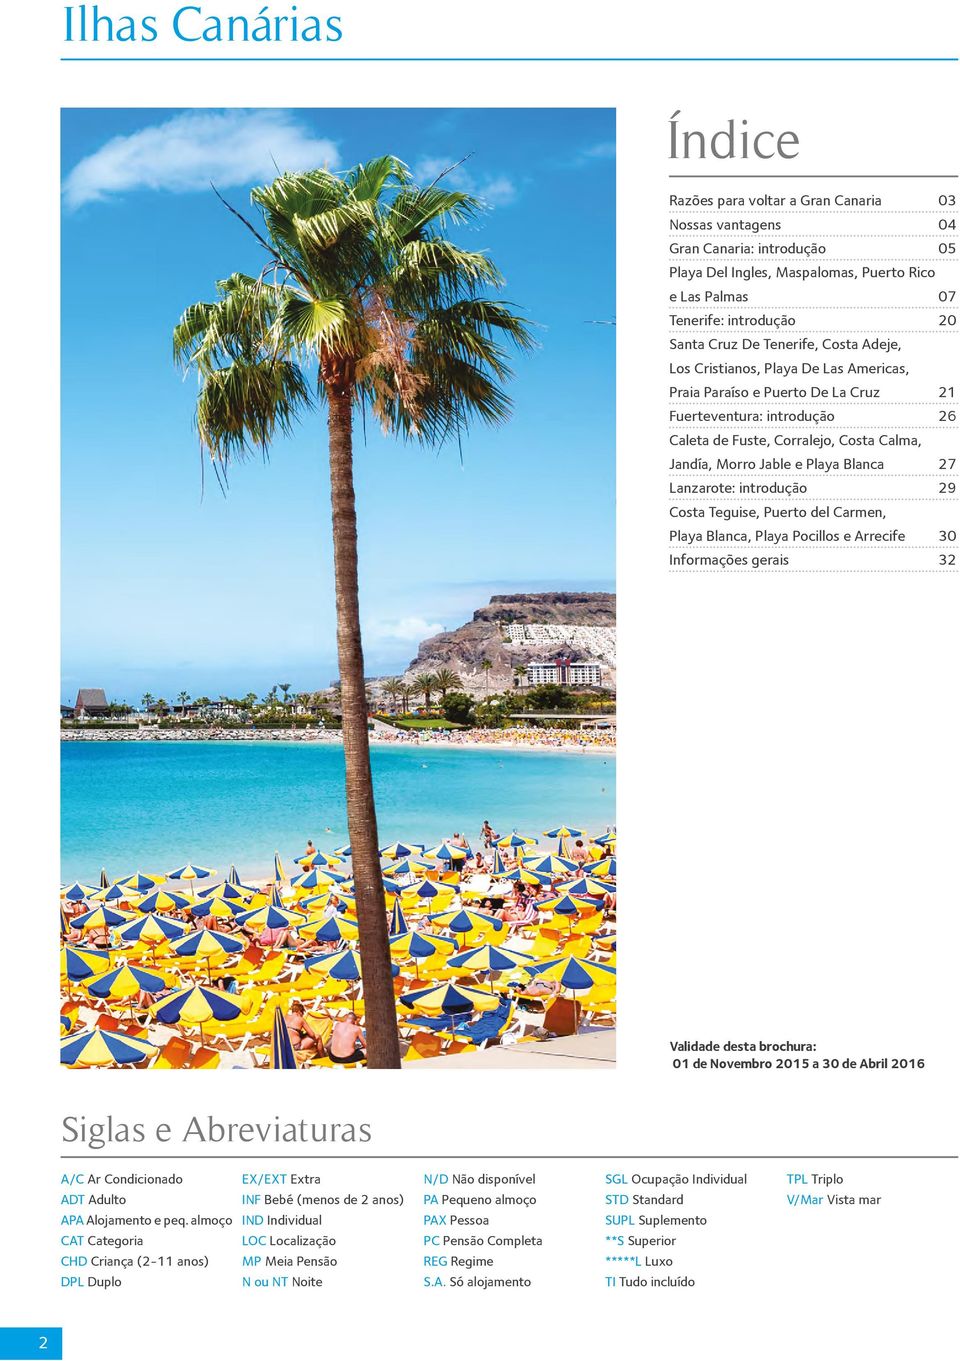 Blanca 27 Lanzarote: introdução 29 Costa Teguise, Puerto del Carmen, Playa Blanca, Playa Pocillos e Arrecife 30 Informações gerais 32 Validade desta brochura: 01 de Novembro 2015 a 30 de Abril 2016